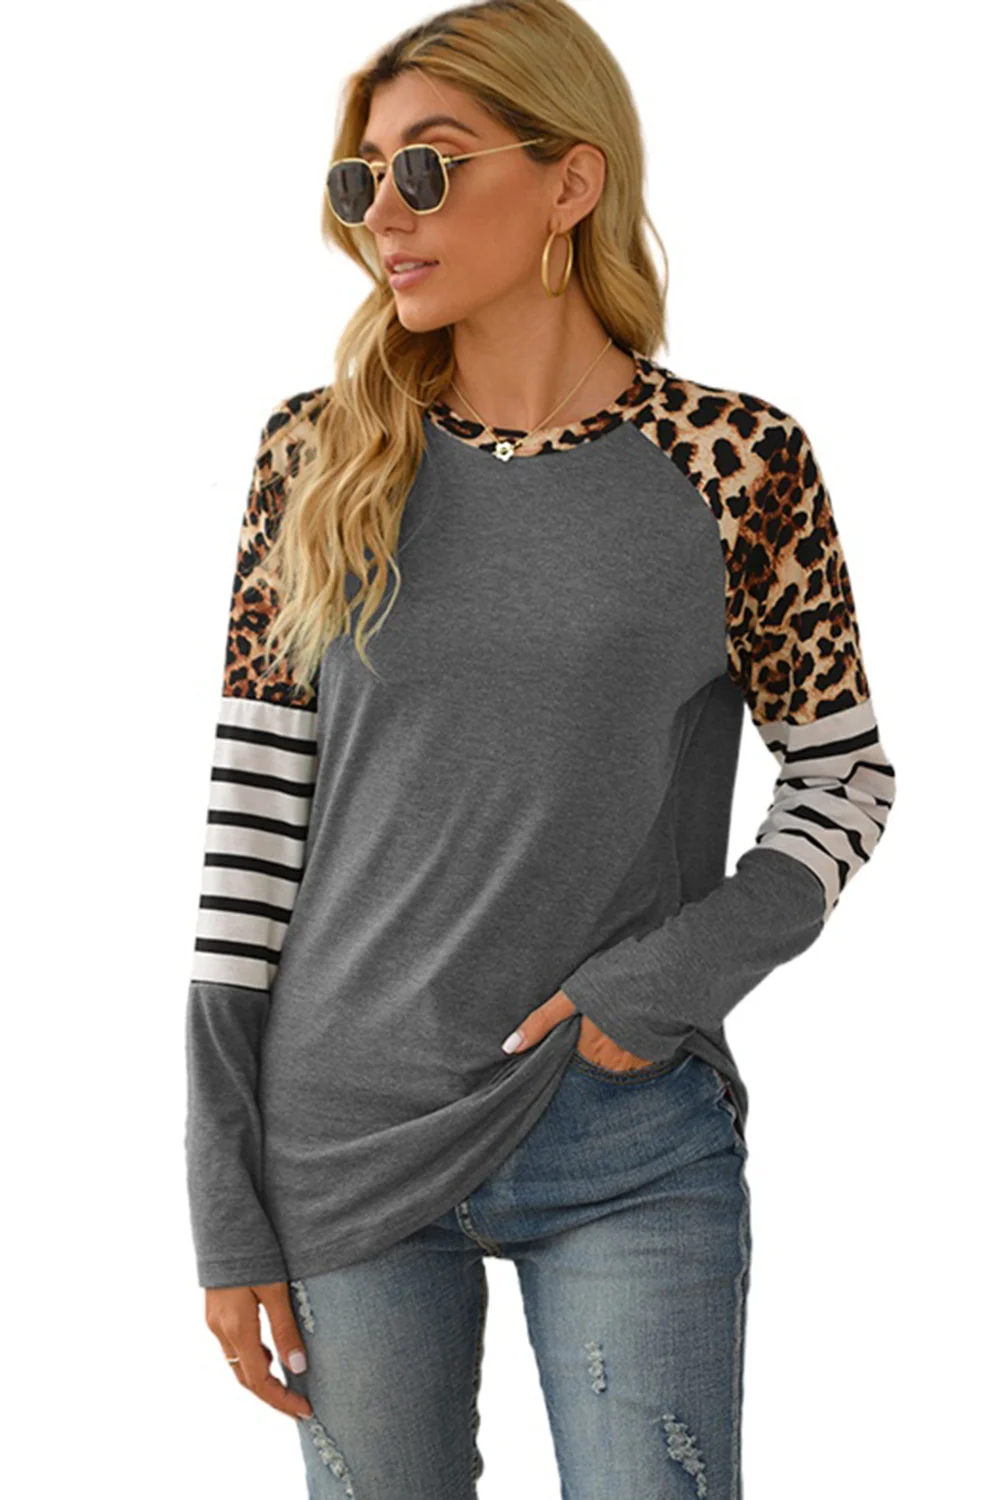 Gray Leopard Striped Long Sleeve Top